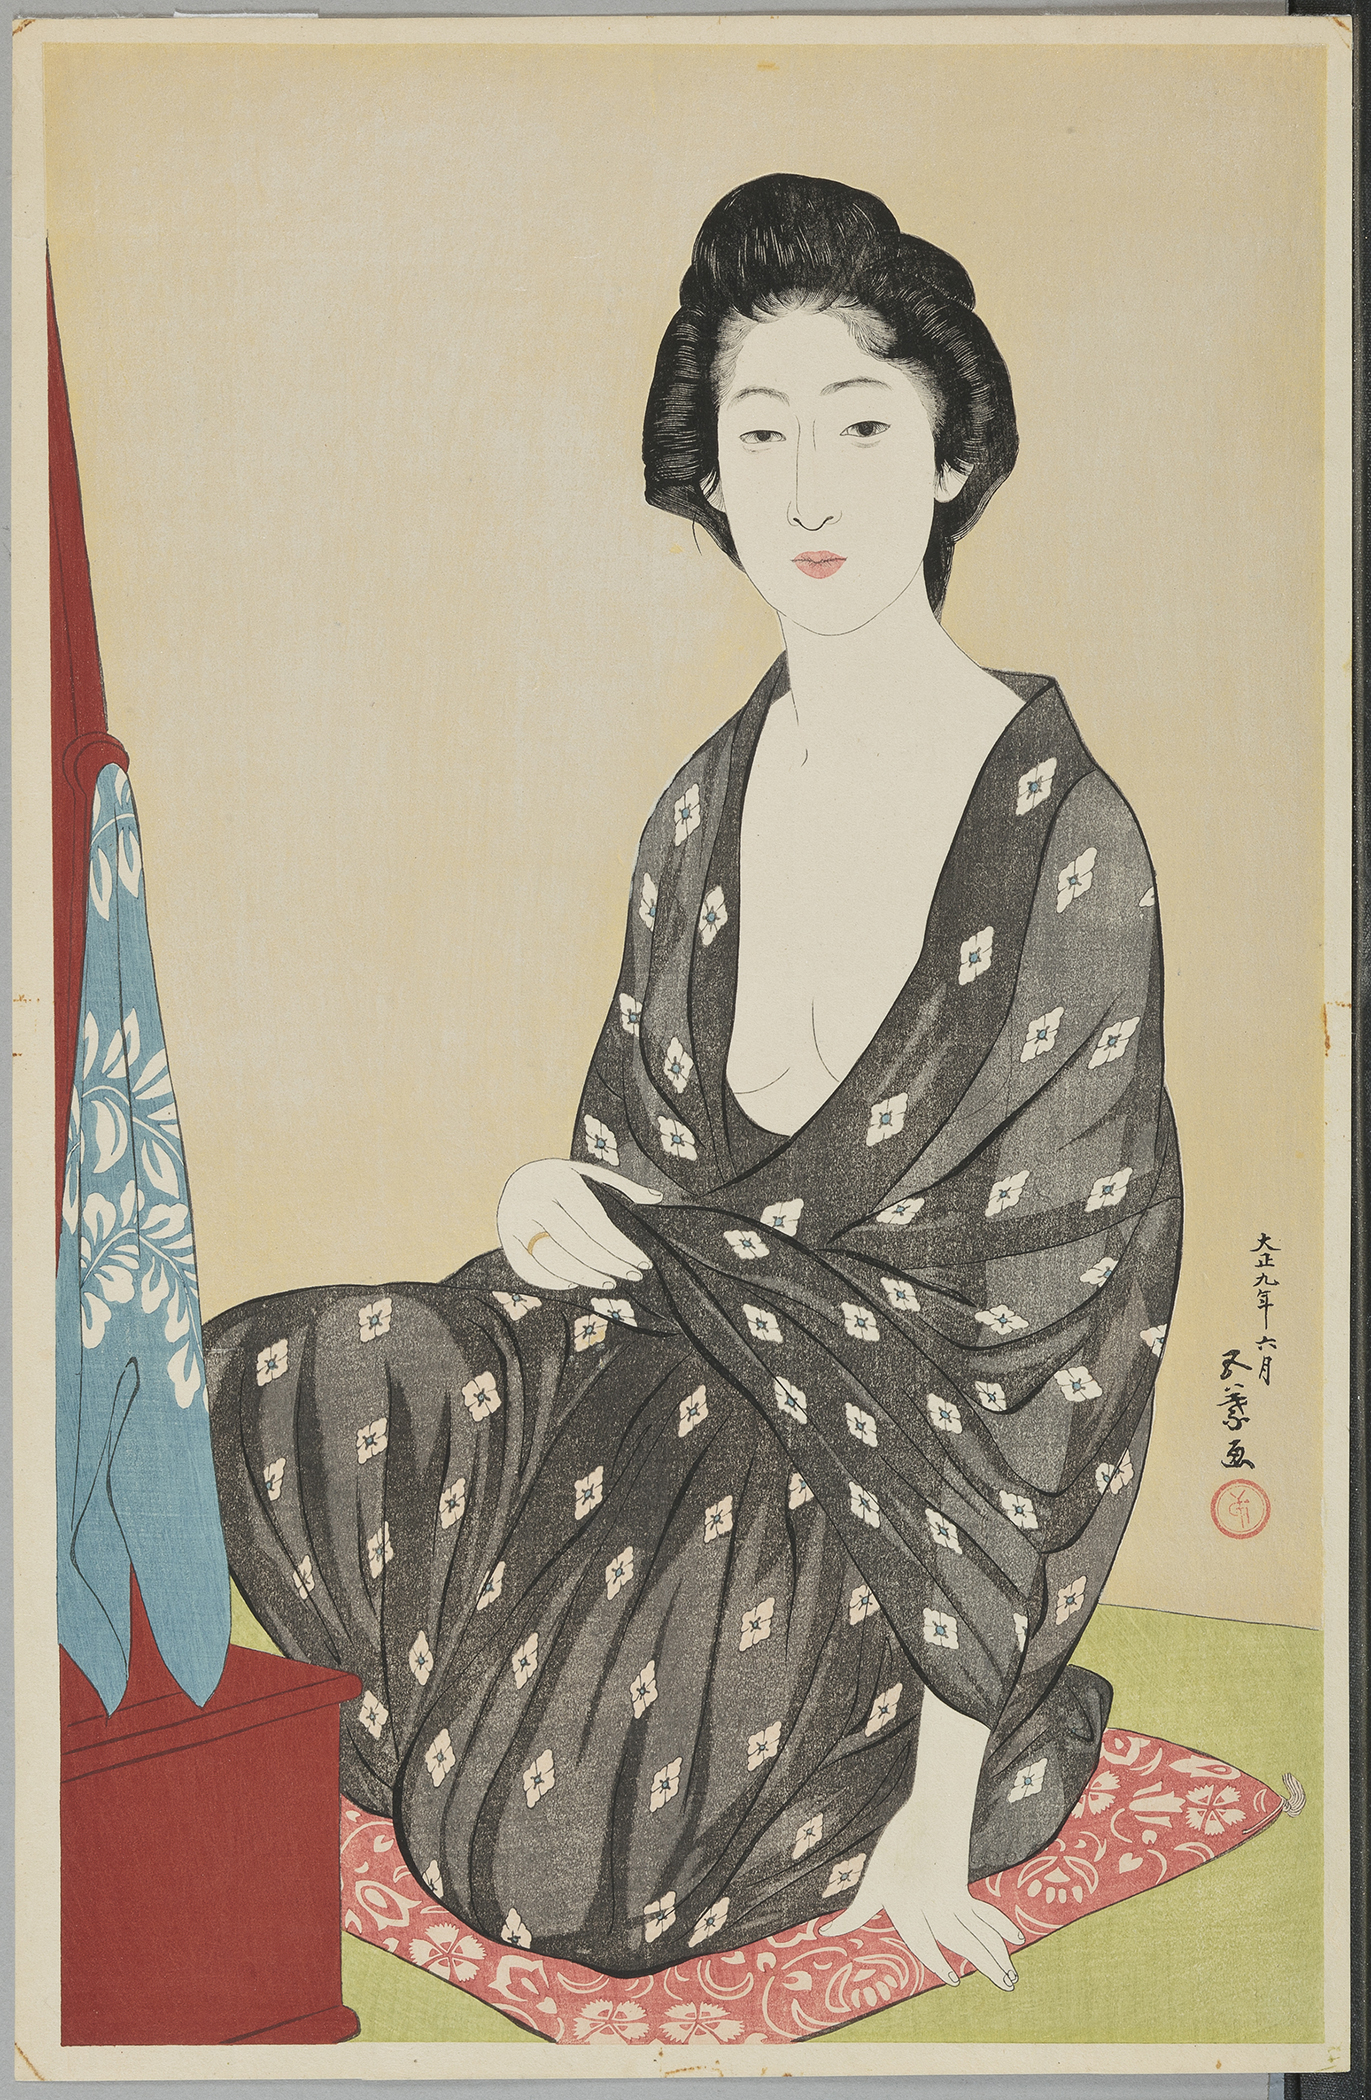 Woman in a Summer Kimono by Hashiguchi Goyō - 1920 - 45.1 x 29.4 cm Toledo Museum of Art